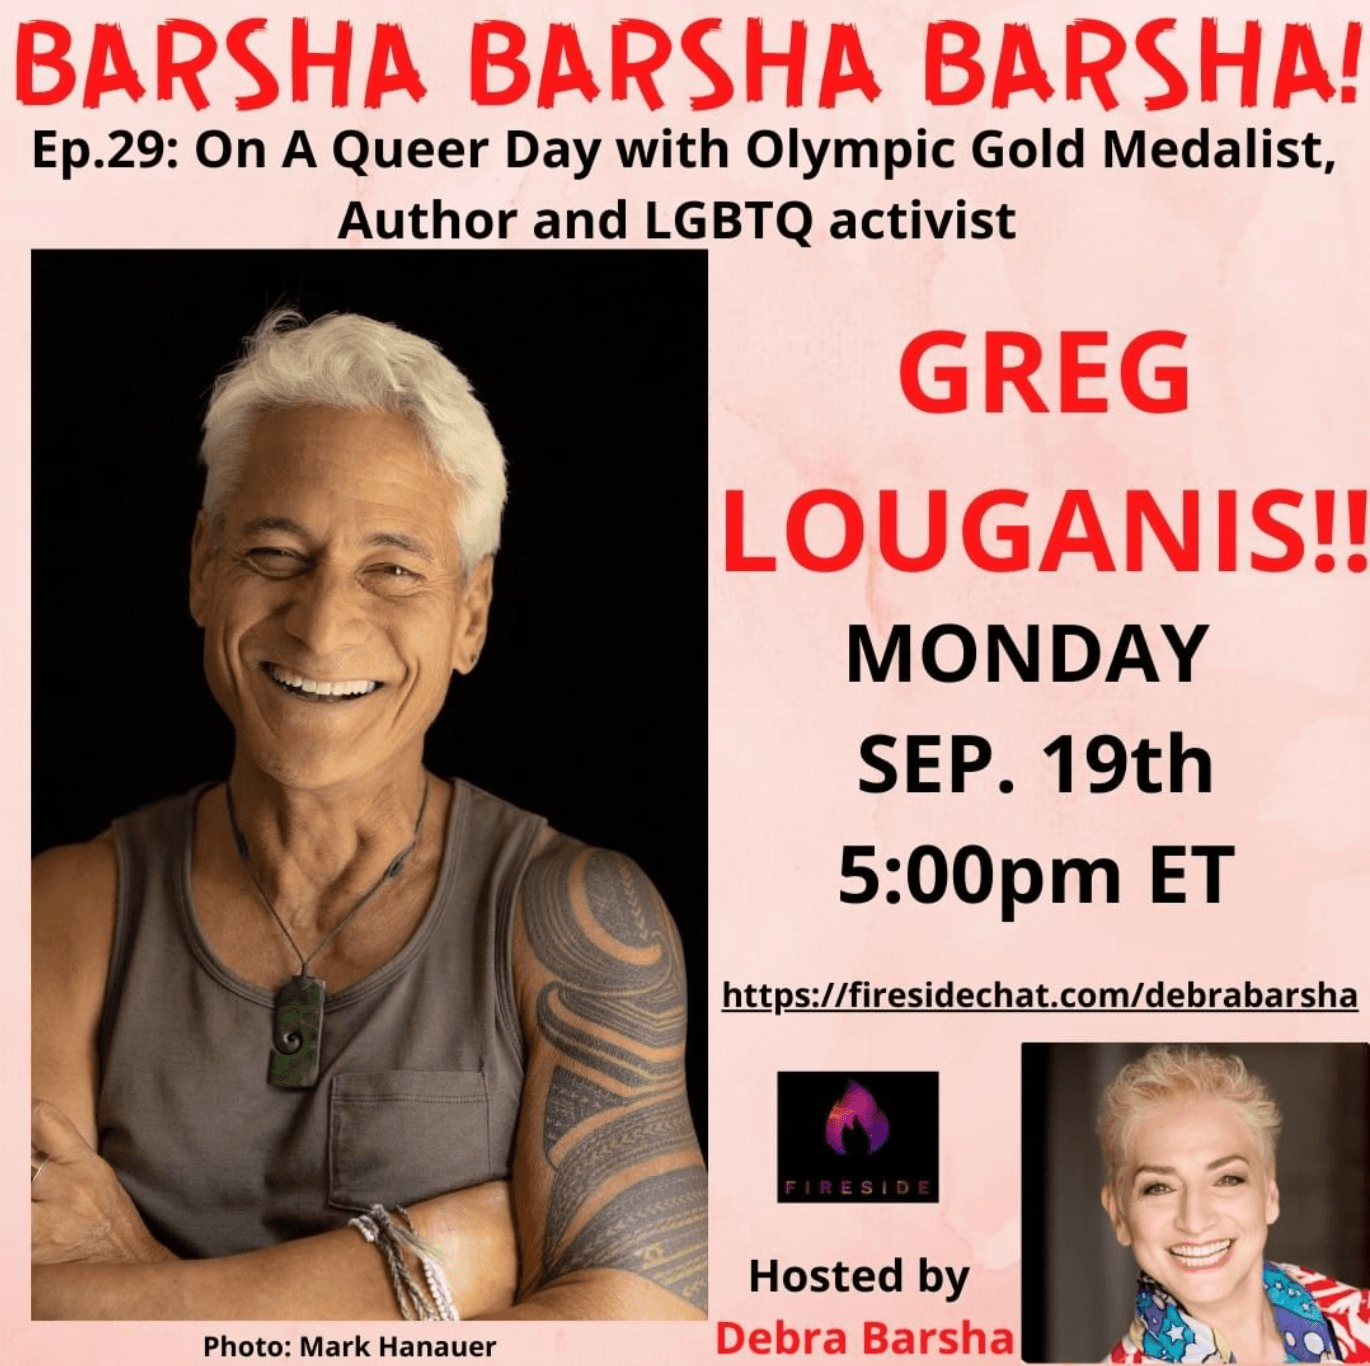 🏳️‍🌈Ep. 29: GREG LOUGANIS!! Olympic Gold Medalist/Author/LGBTQ activist!